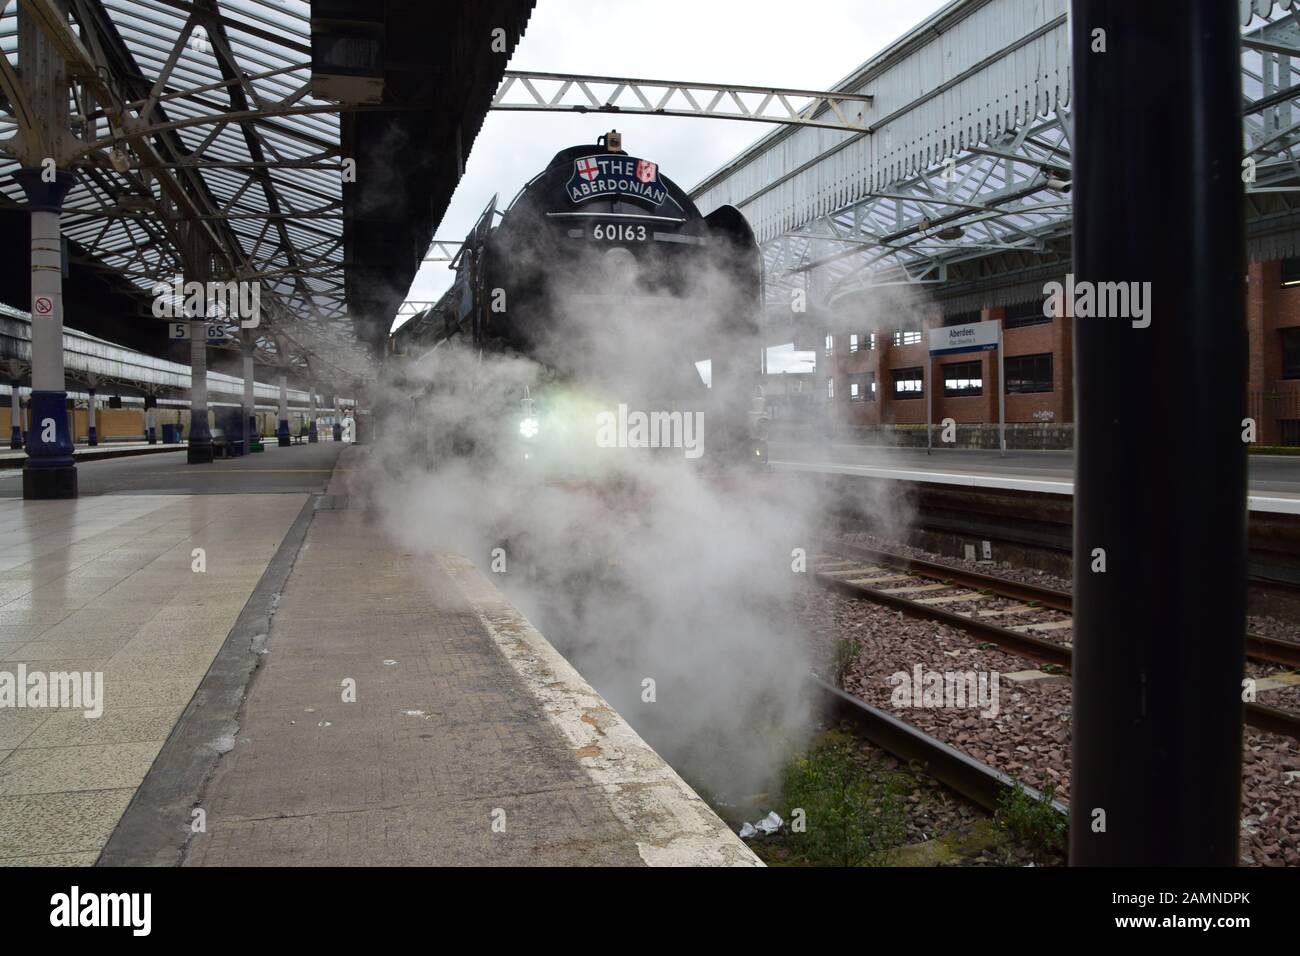 Aberdonian steam engine arrives at Aberdeen Station Stock Photo